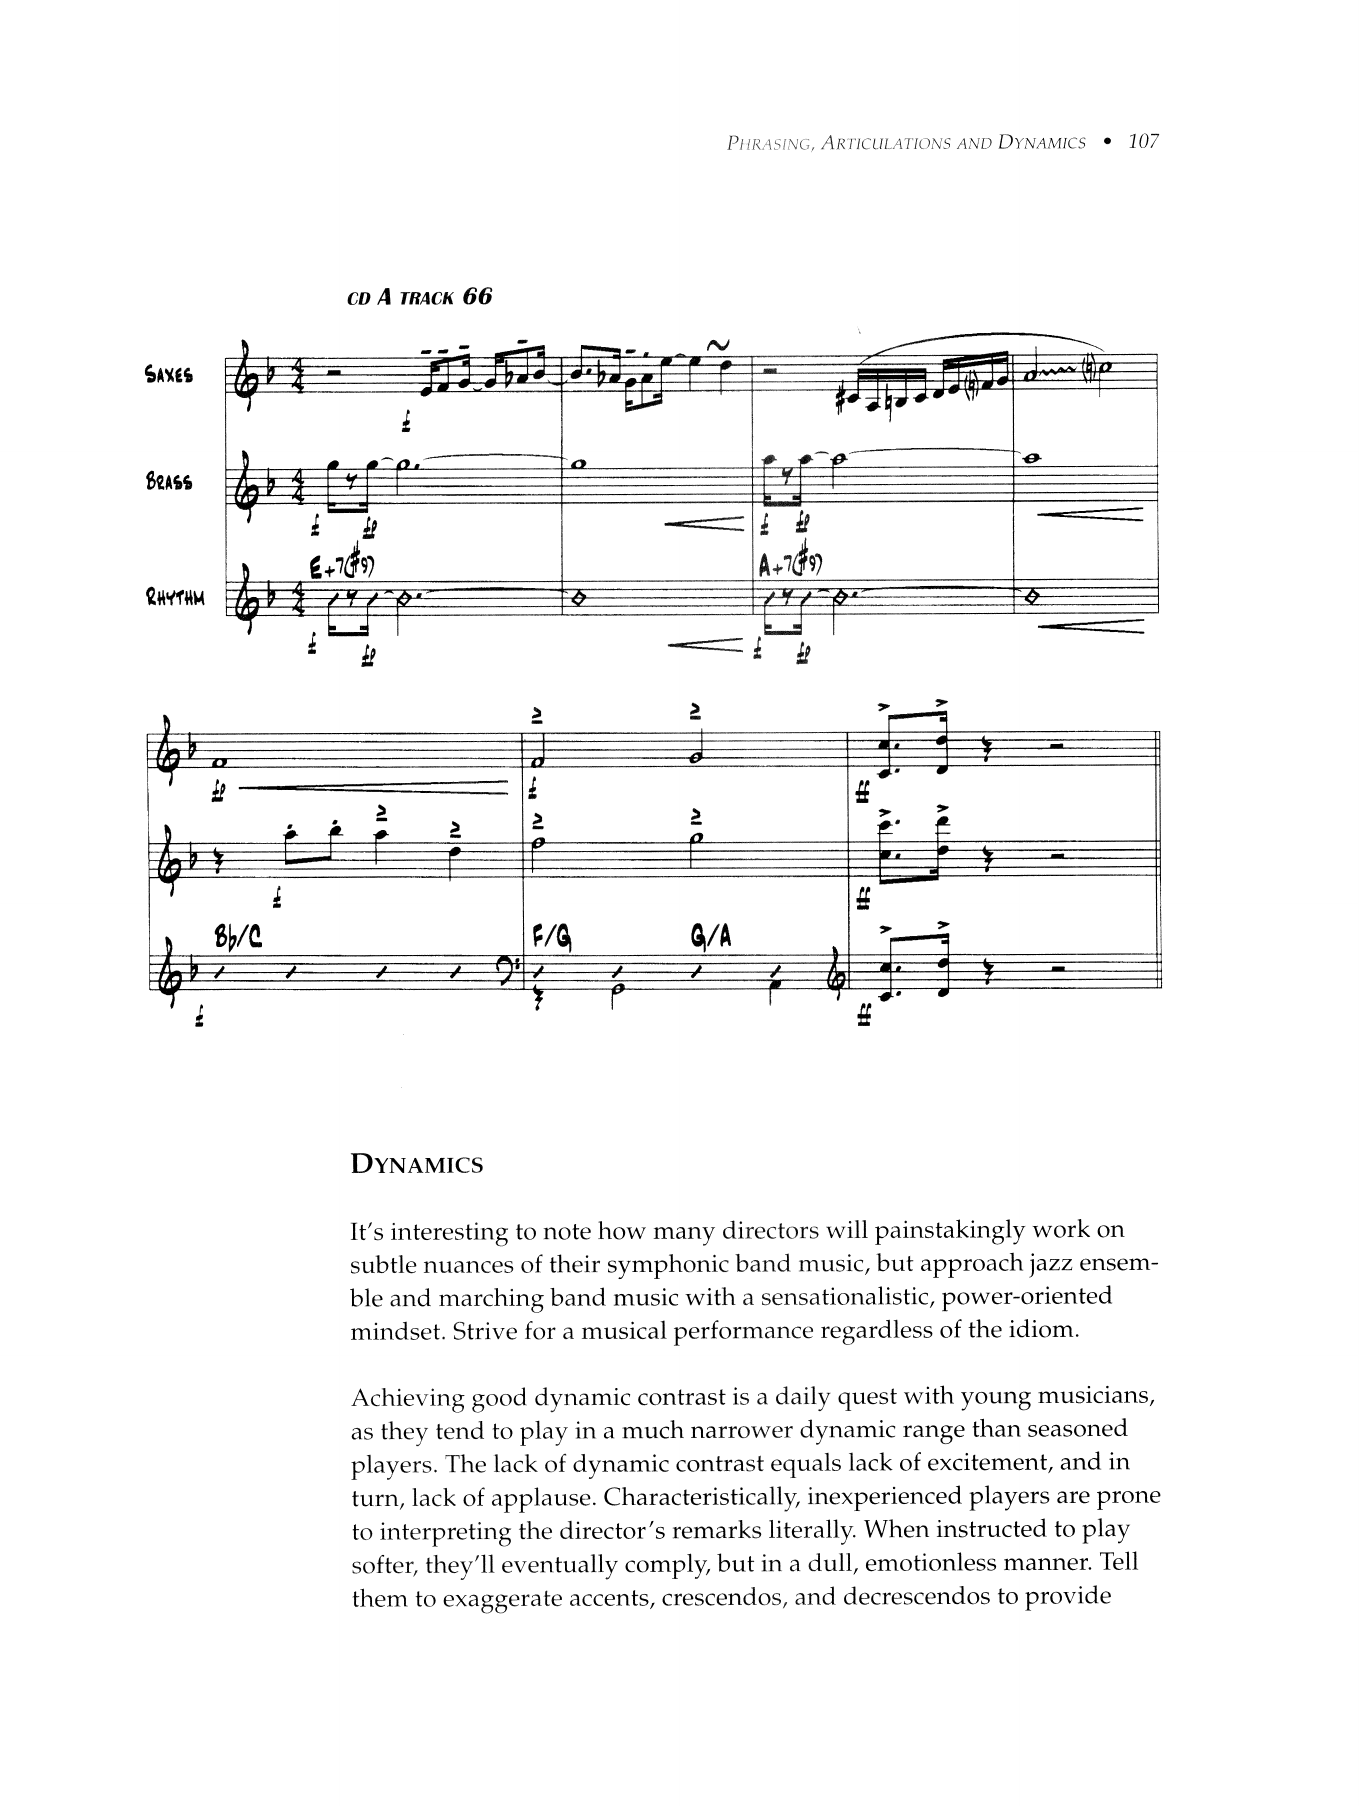 Download Doug Beach and Jeff Jarvis The Jazz Educator's Handbook - Part 2 Sheet Music